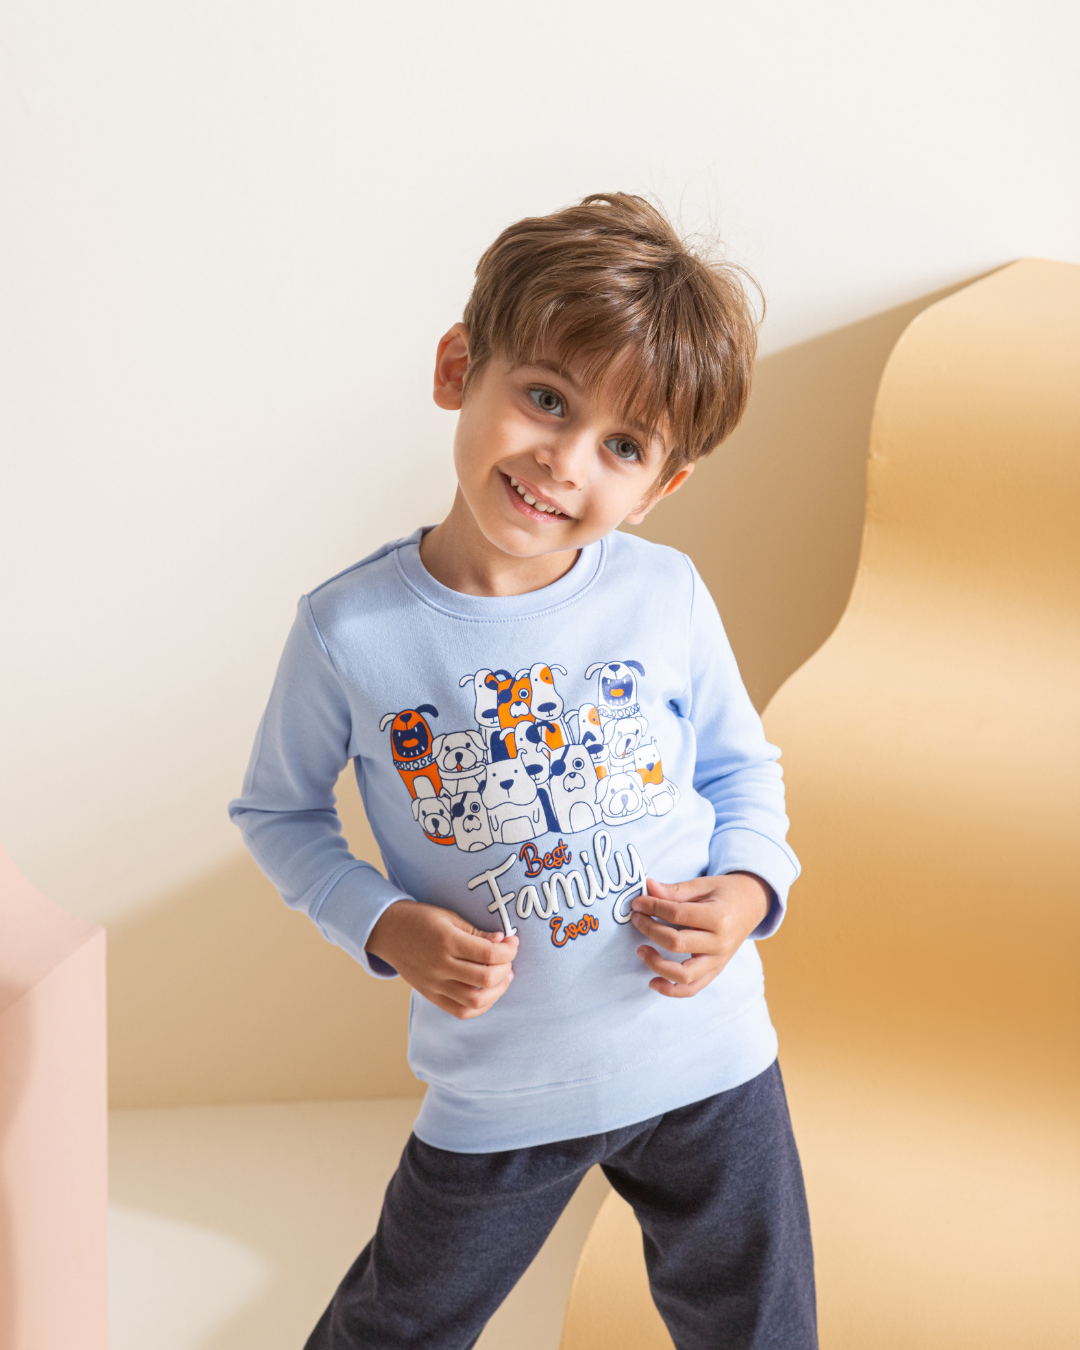 Best Family Pajamas for boys, interlock print set